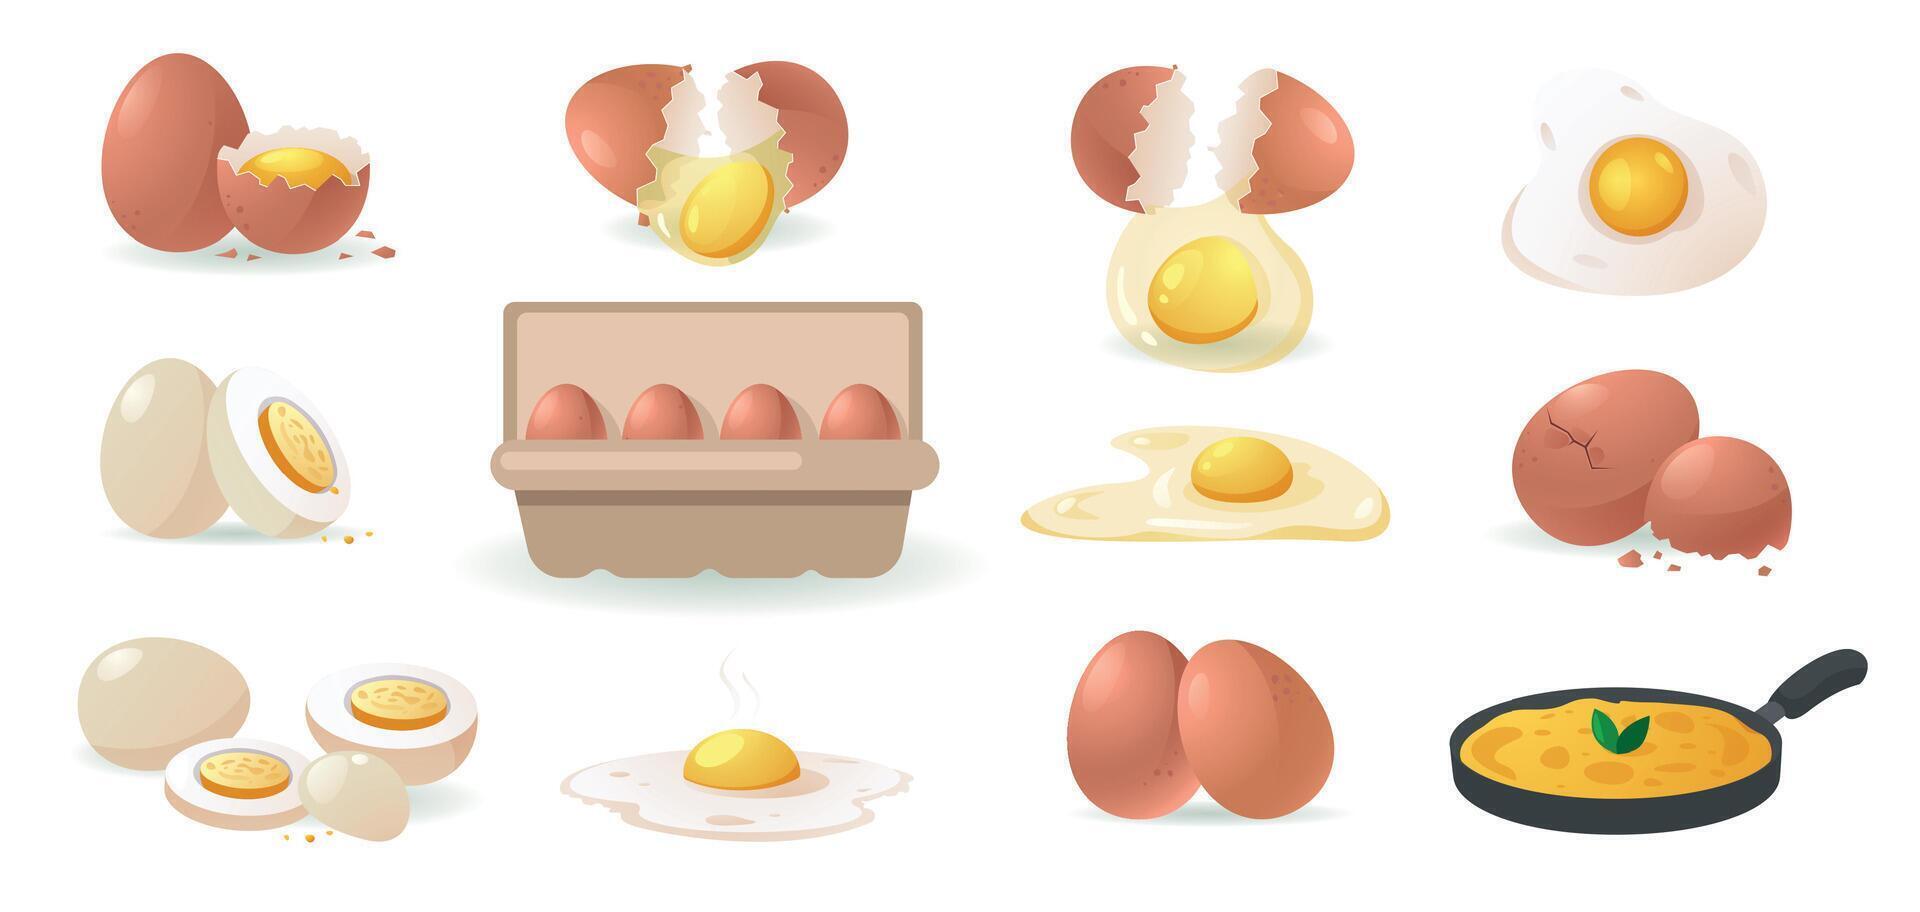 dibujos animados huevos colocar. roto huevo crudo yema de huevo cáscara de huevo proteína, Fresco granja Cocinando natural ingredientes en envase, sano orgánico comida concepto. vector aislado conjunto